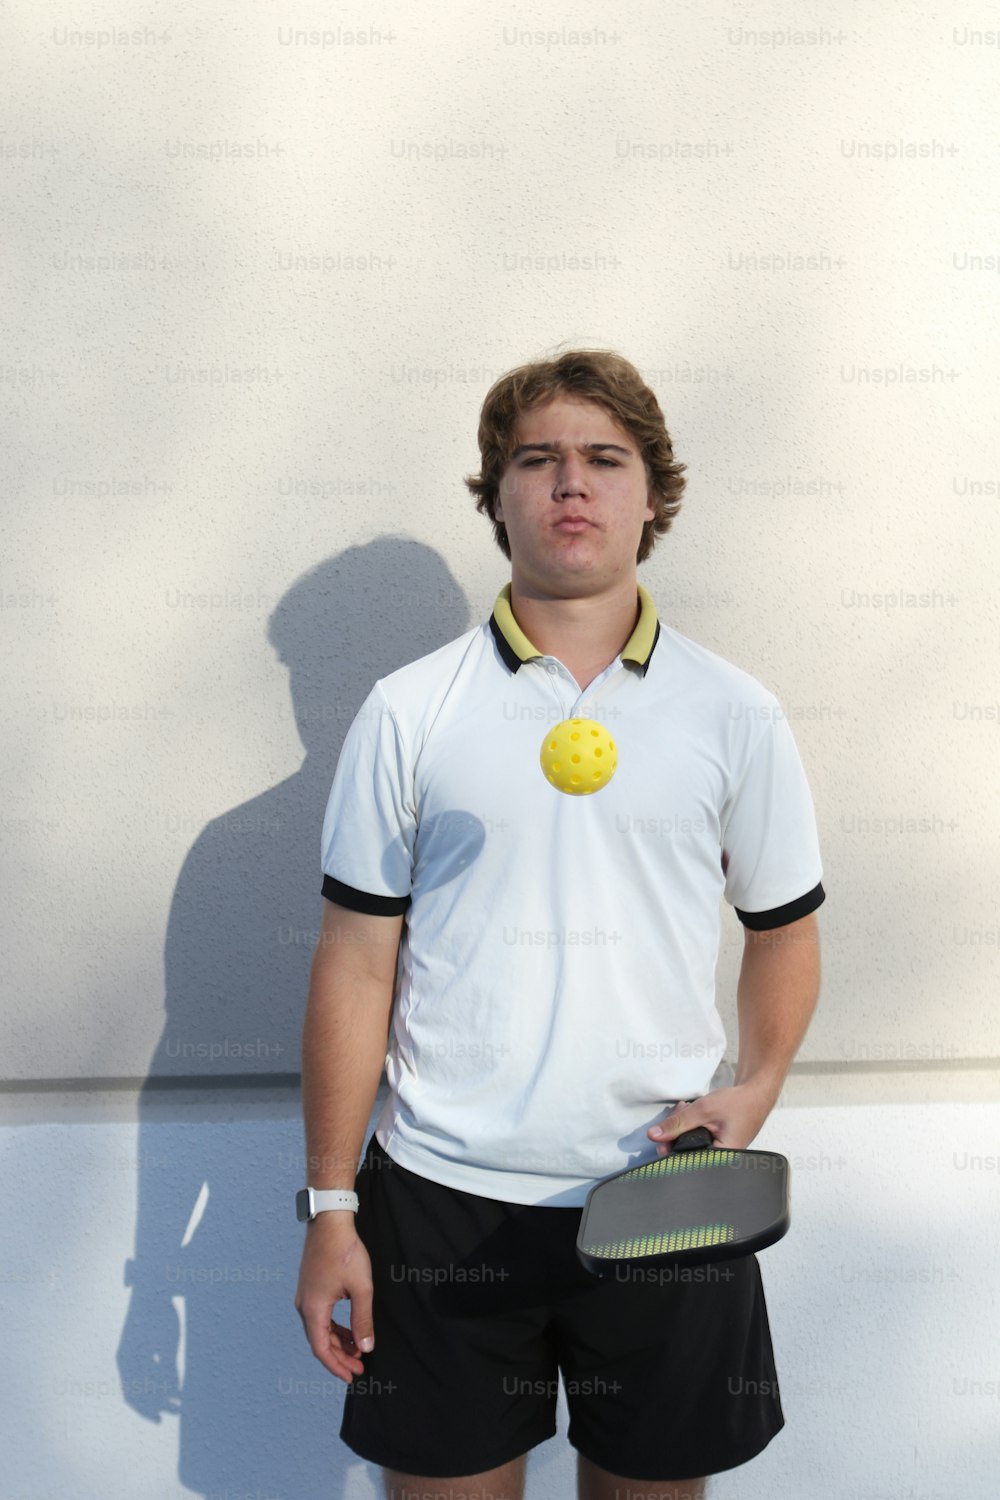 a young man holding a tennis racquet and a tennis ball